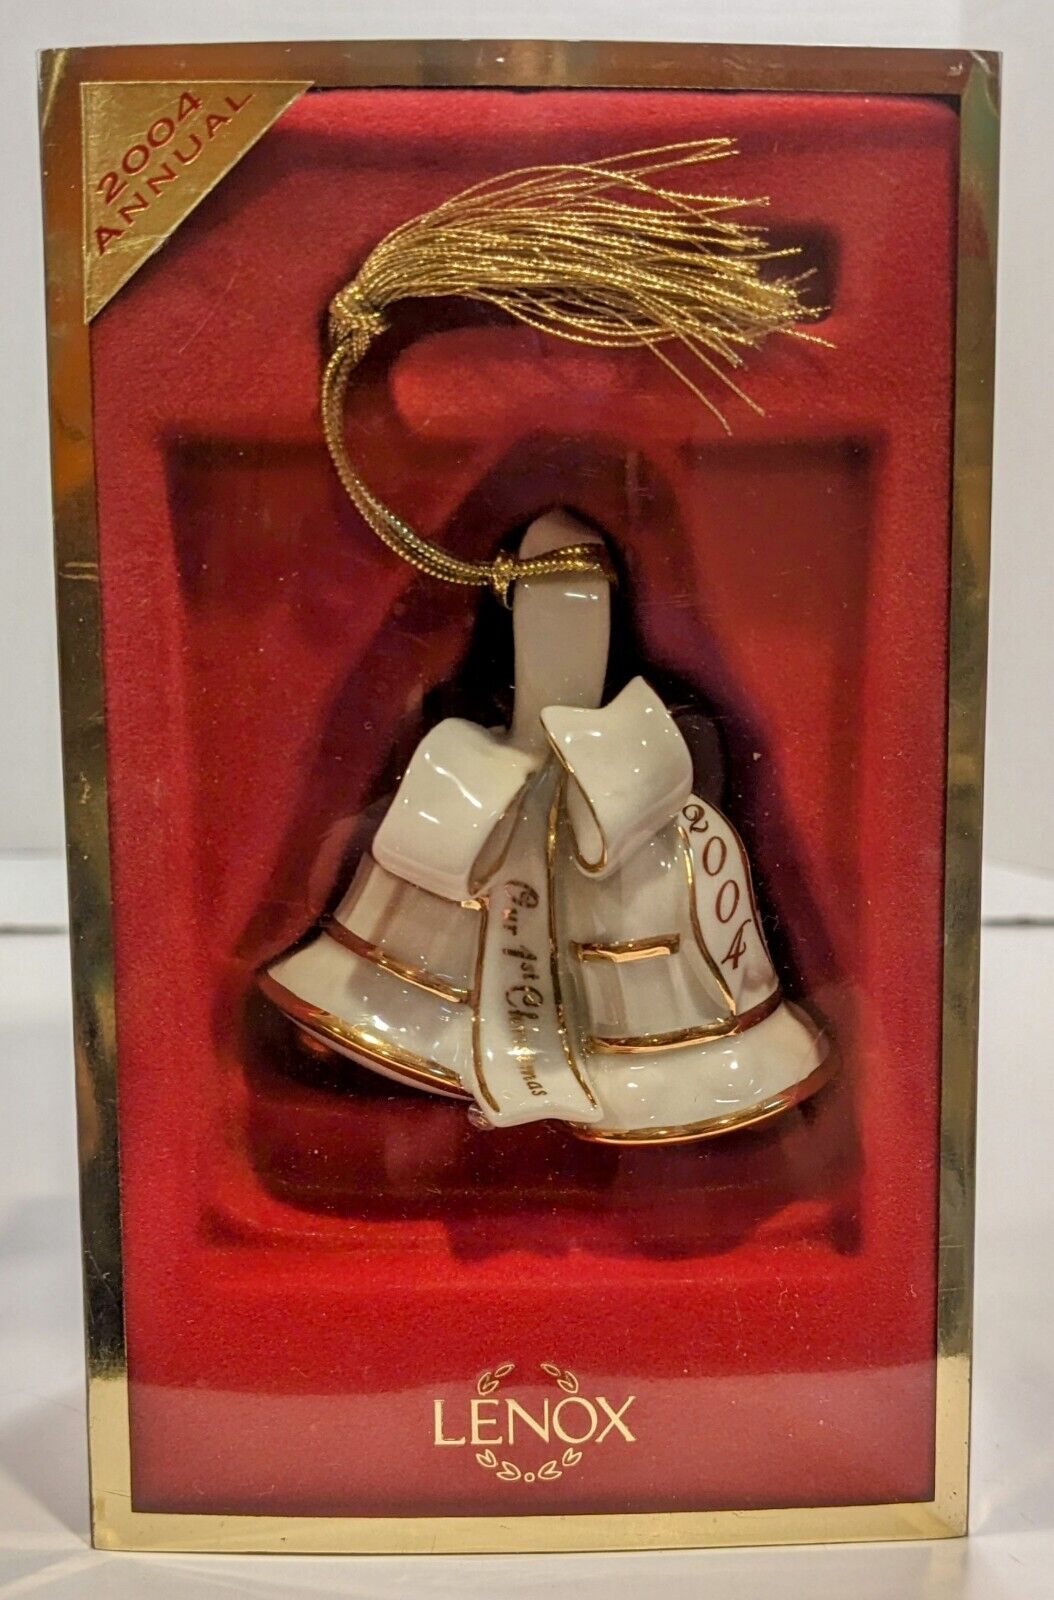 2004 1st Christmas Lenox Ornament Bells China Porcelain   Mint in Box       